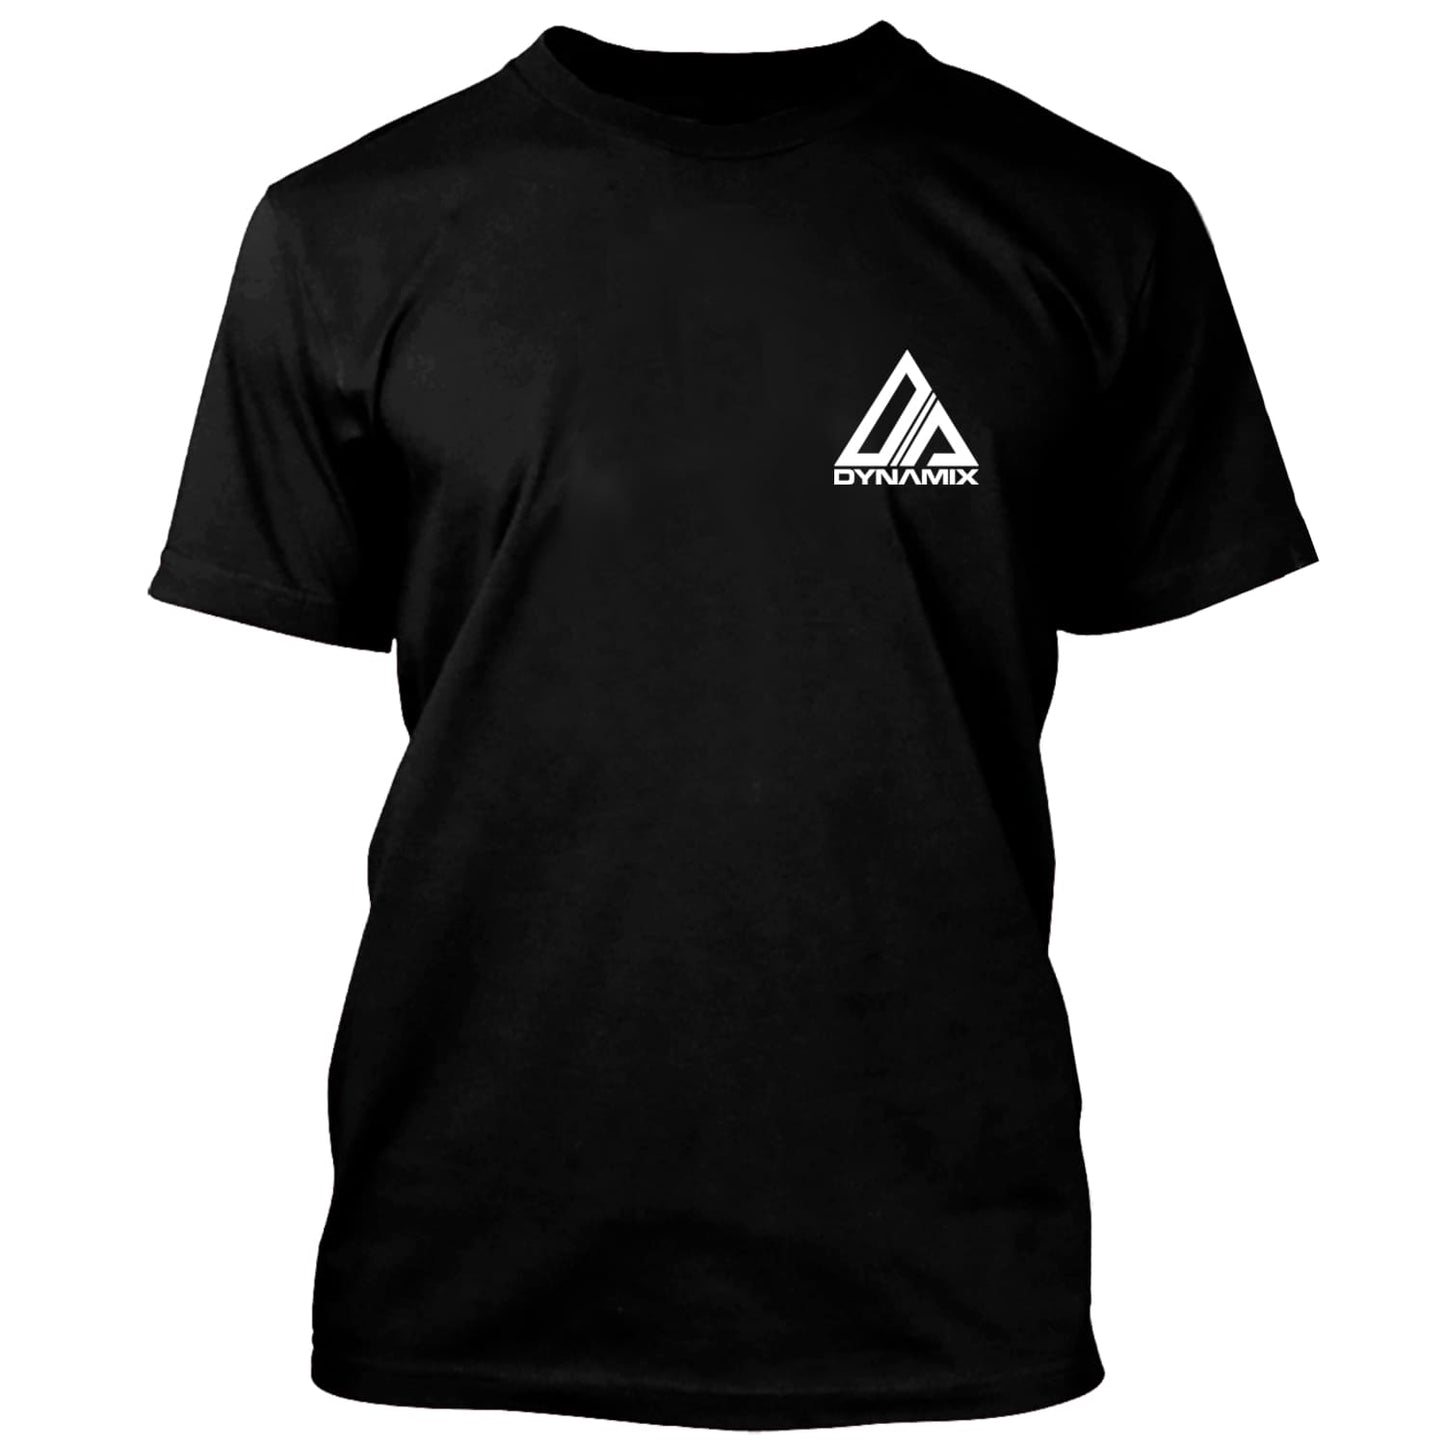 Dynamix Athletics T-Shirt MMA Classic - Schwarz